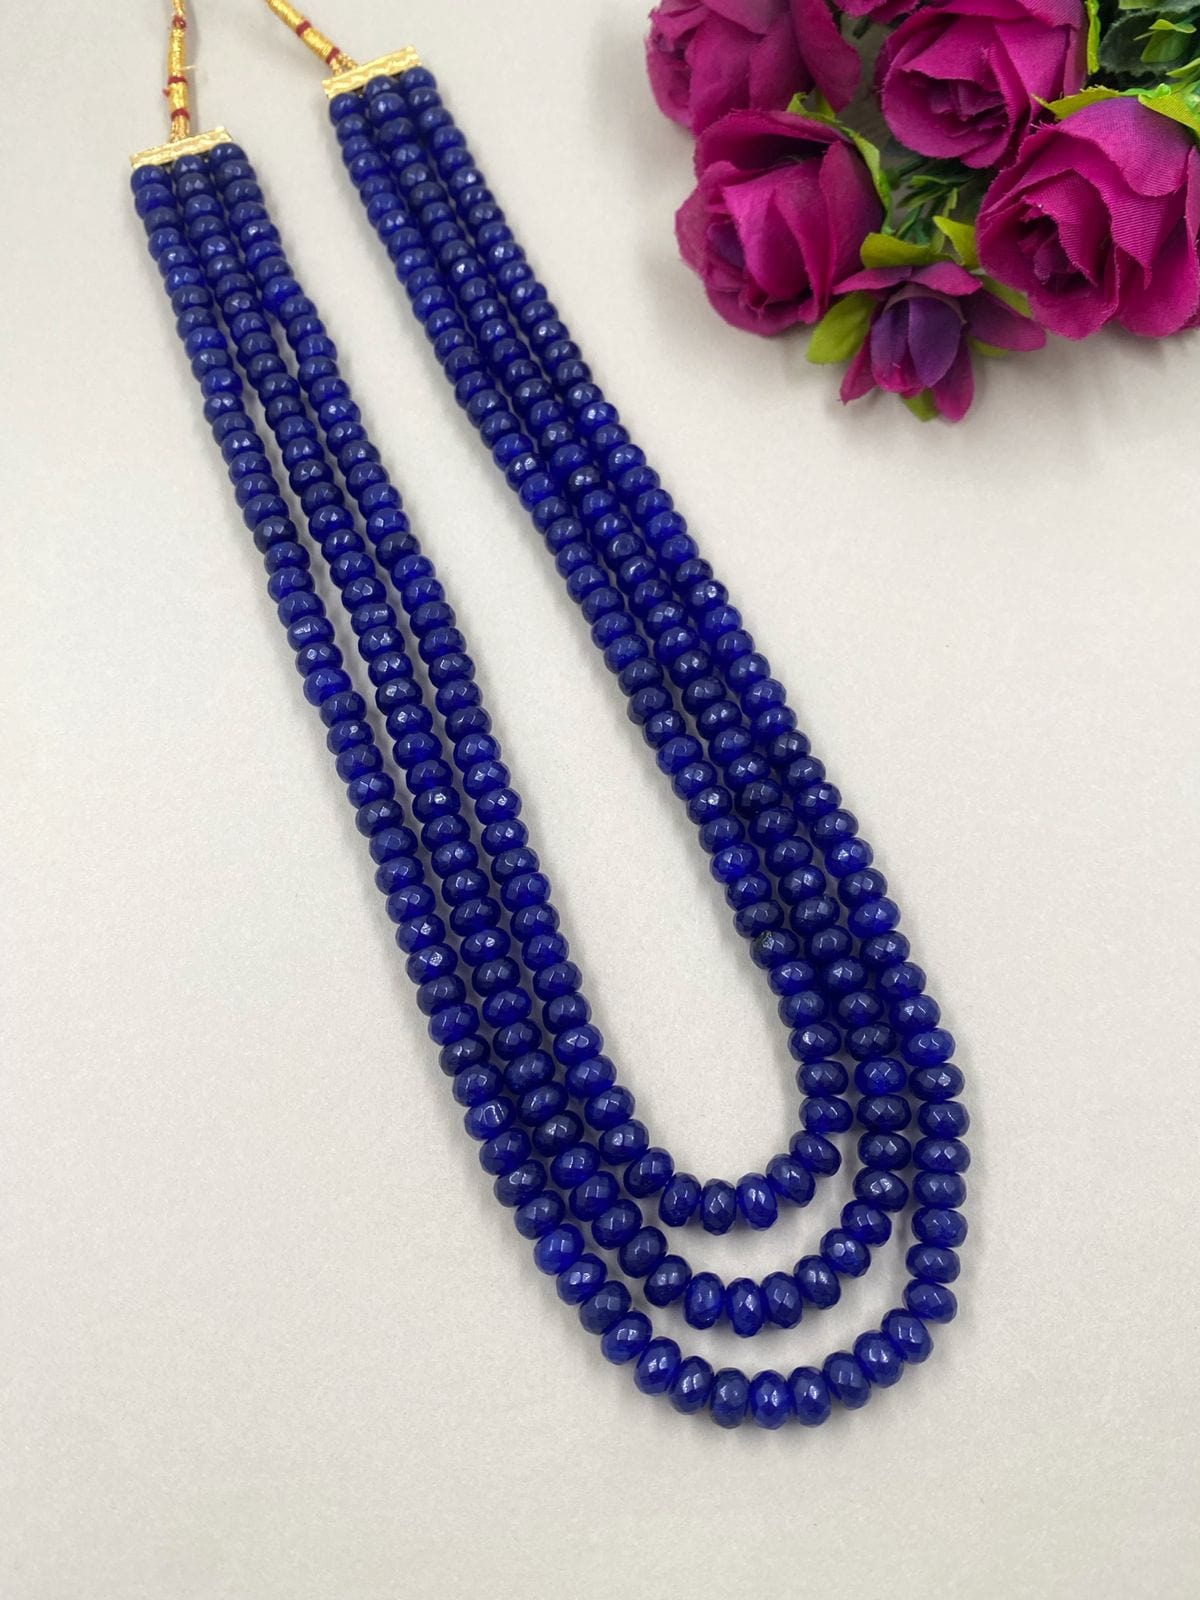 Chevron Millefiori Beads, African Art Trade Beads Necklace